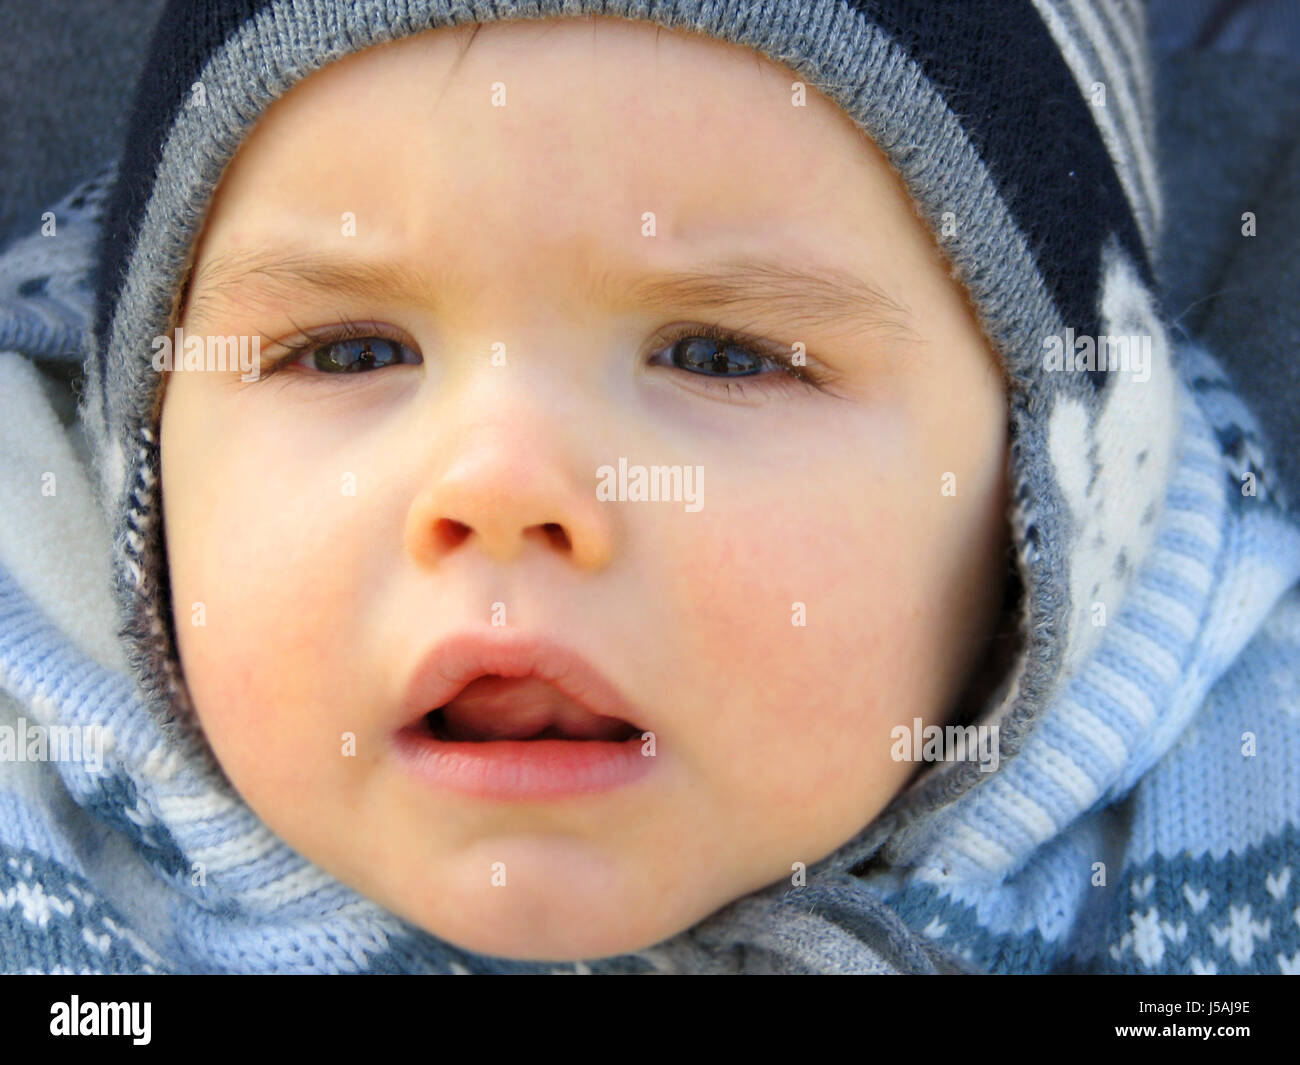 mouth,face,portrait,eyes,cap,observe,toddler,direkter blick,babygesicht,sss Stock Photo